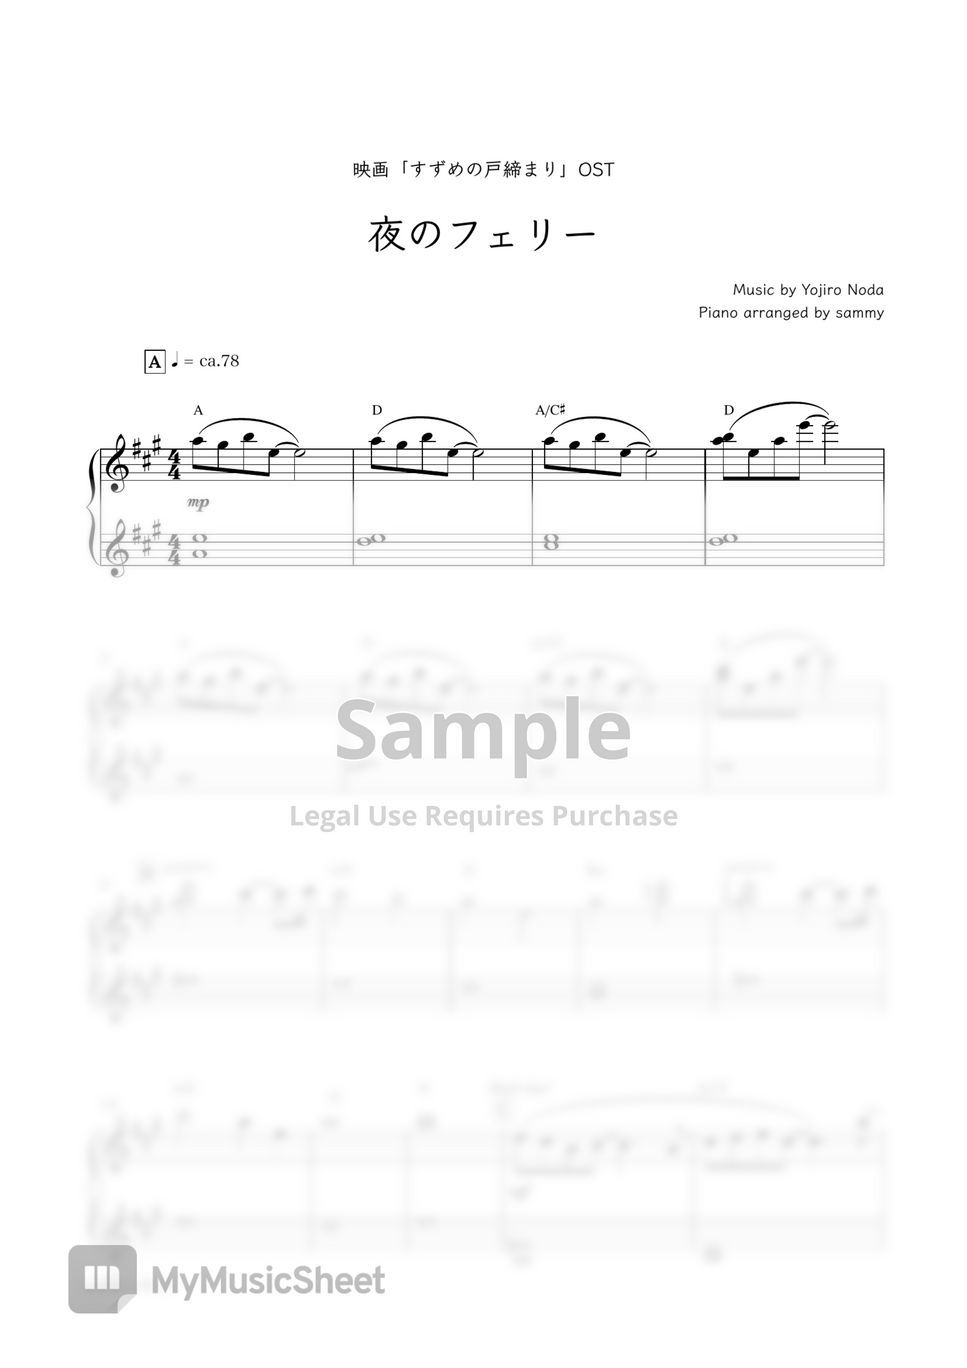 "Suzume (すずめの戸締まり)"OST - At Night in Ferry (夜のフェリー) by sammy